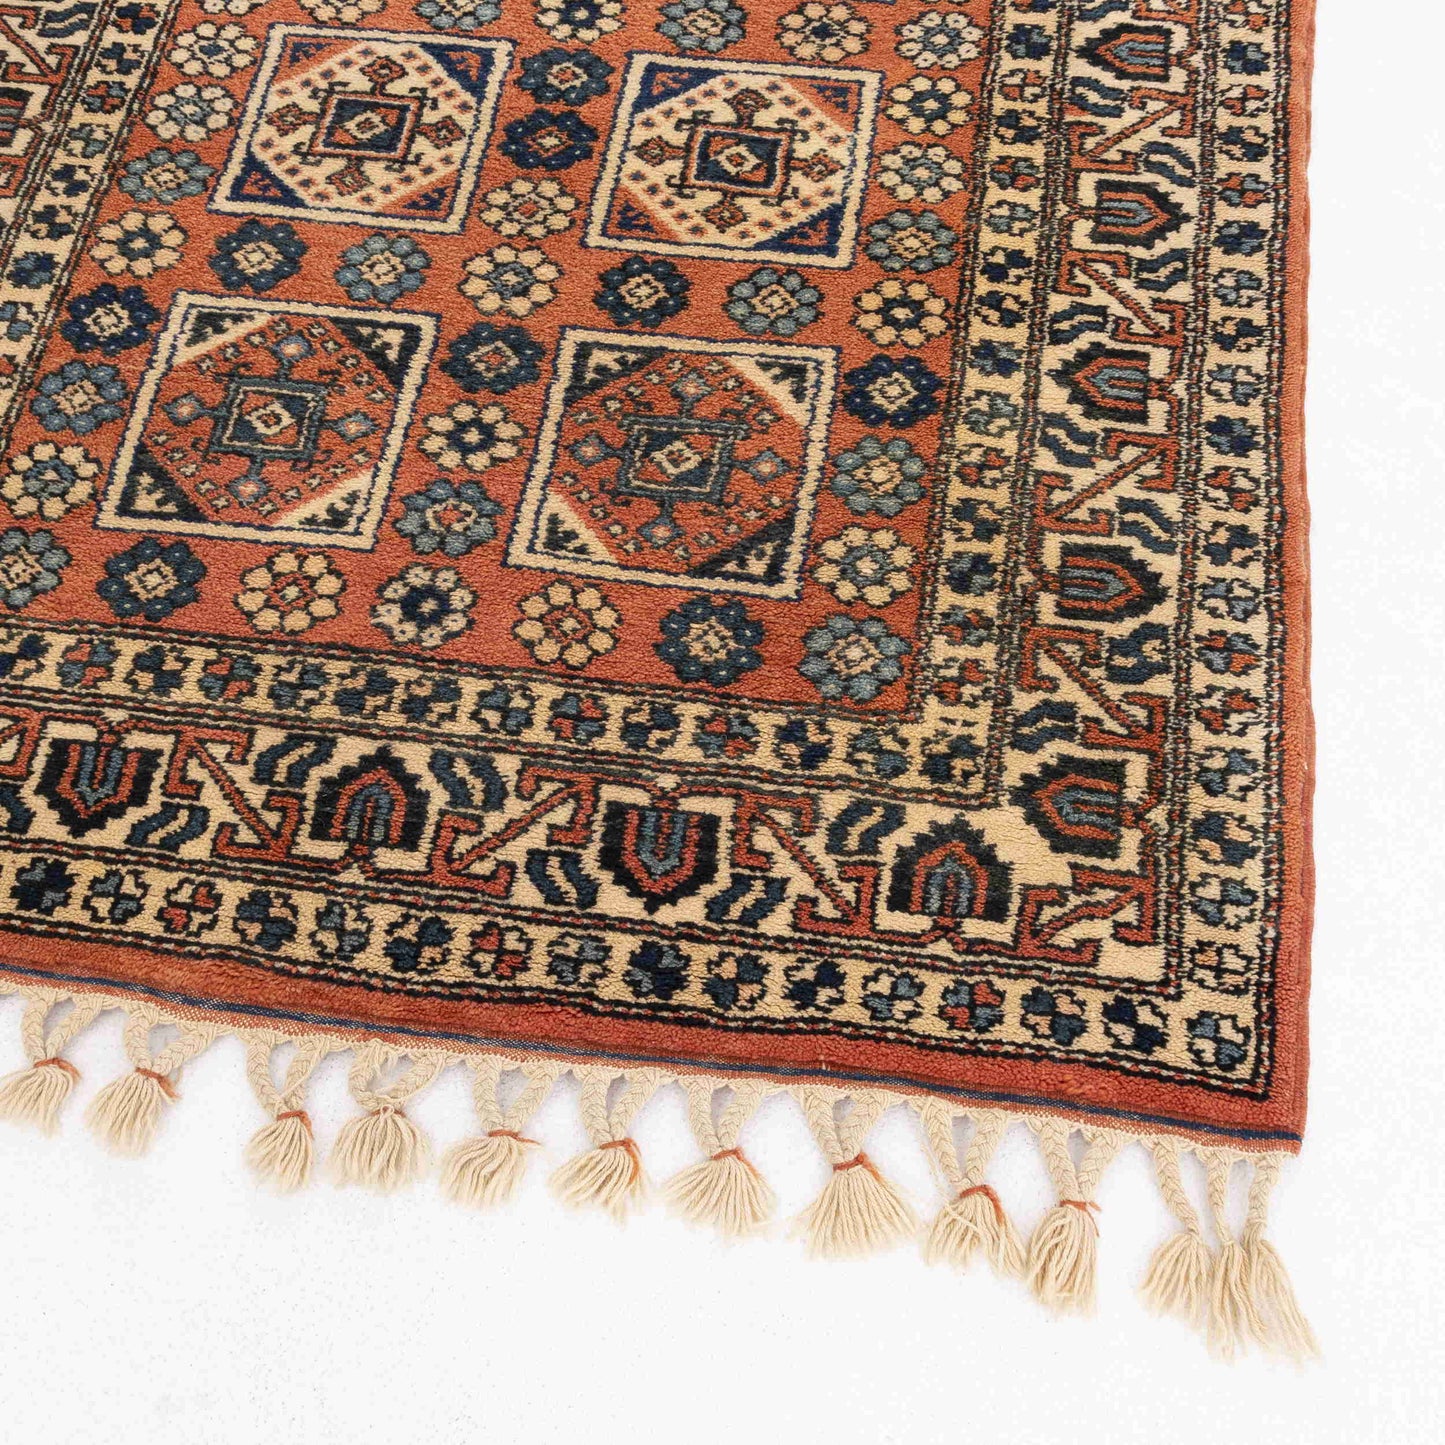 Oriental Rug Yoruk Hand Knotted Wool On Wool 128 X 185 Cm - 4' 3'' X 6' 1'' Orange C011 ER01